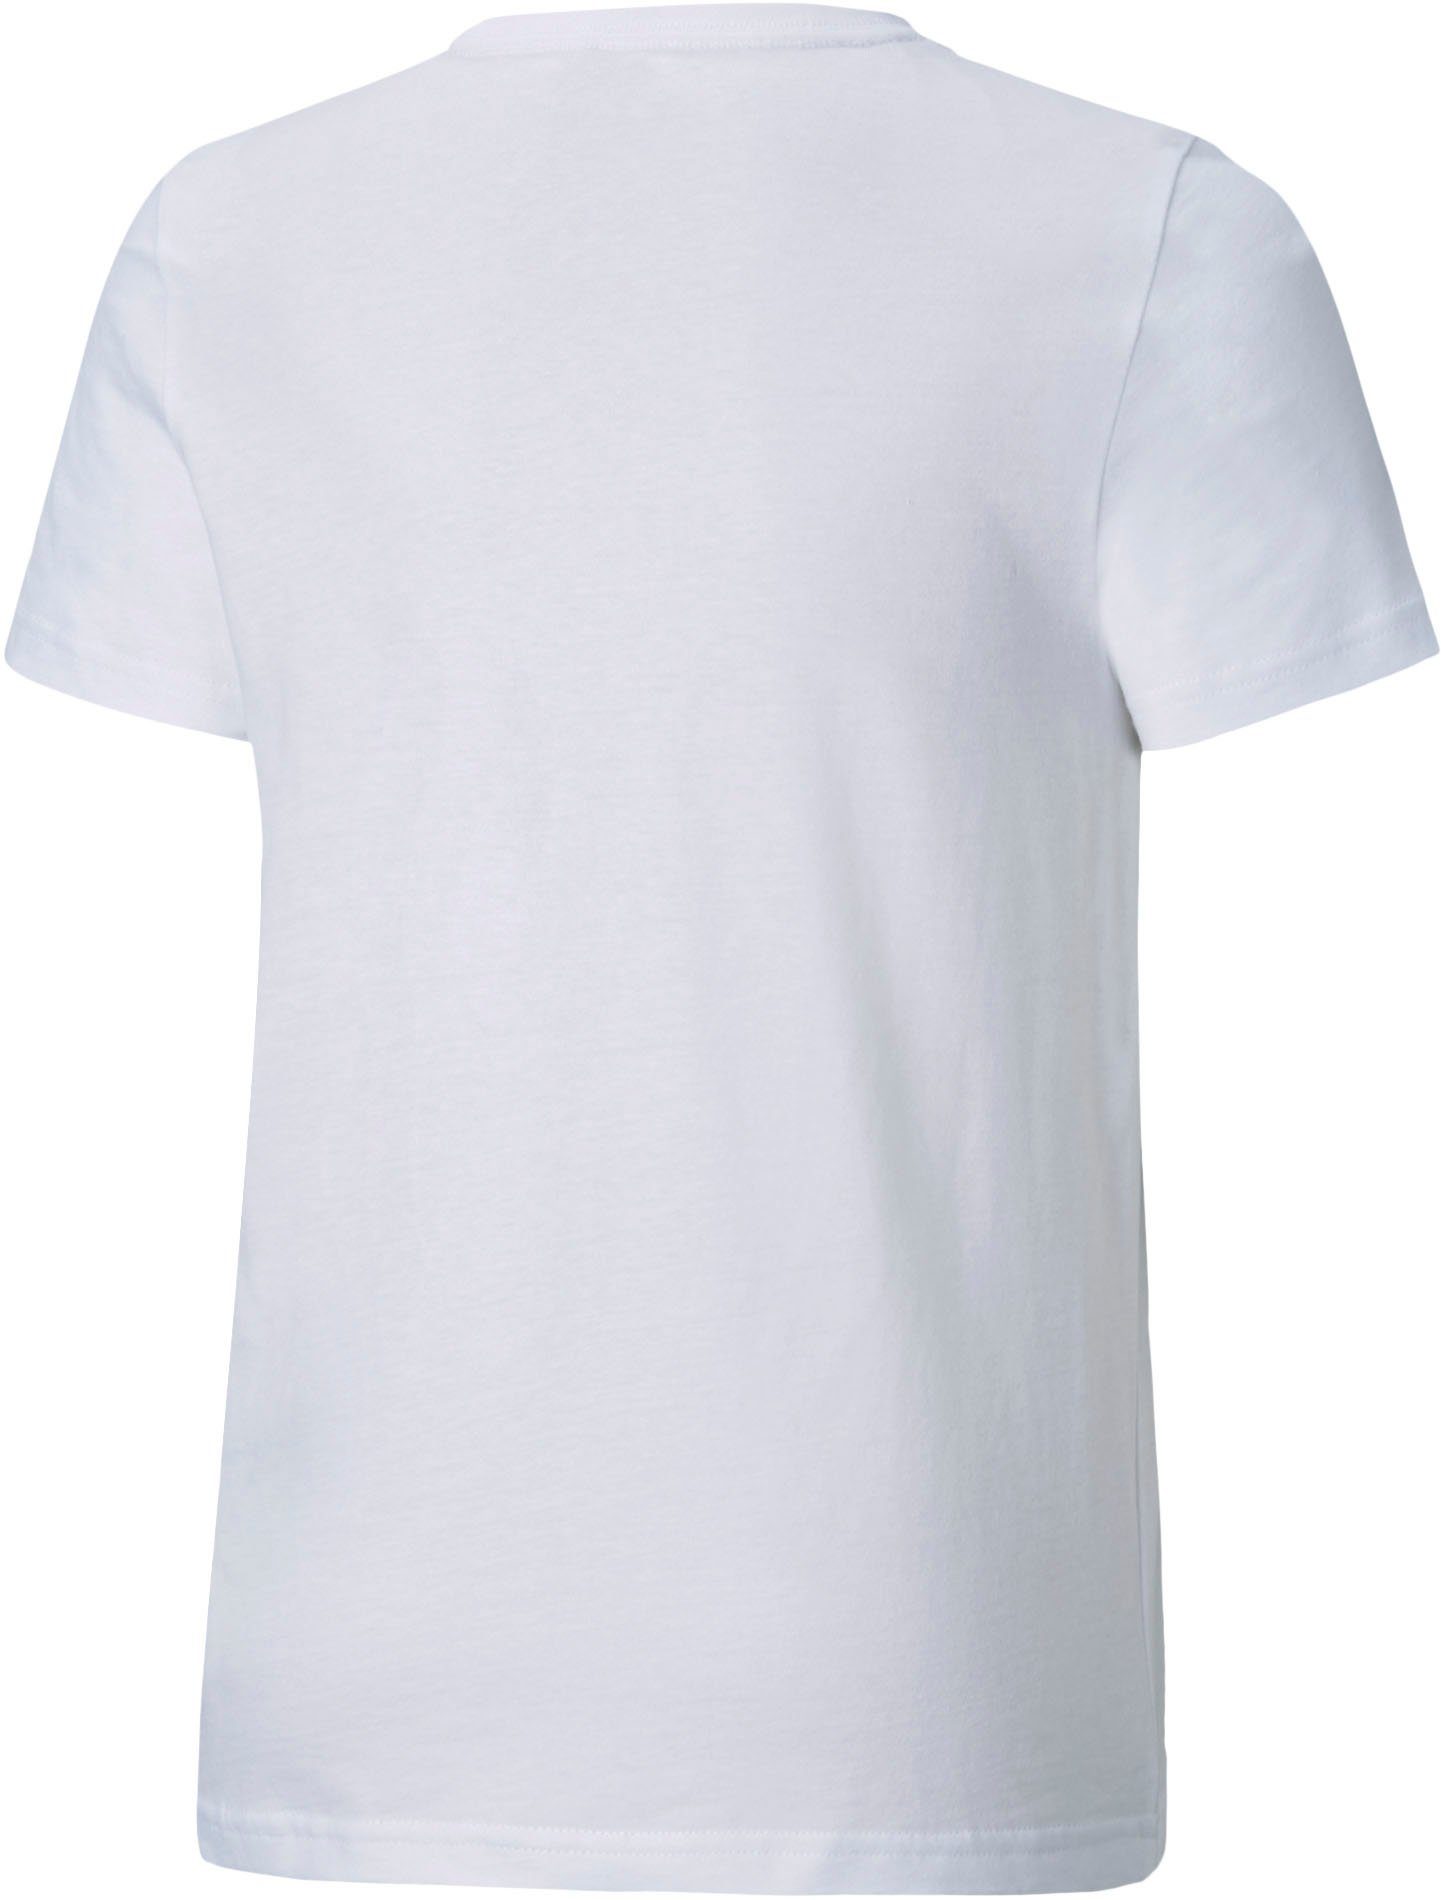 White B ESS LOGO PUMA TEE T-Shirt Puma